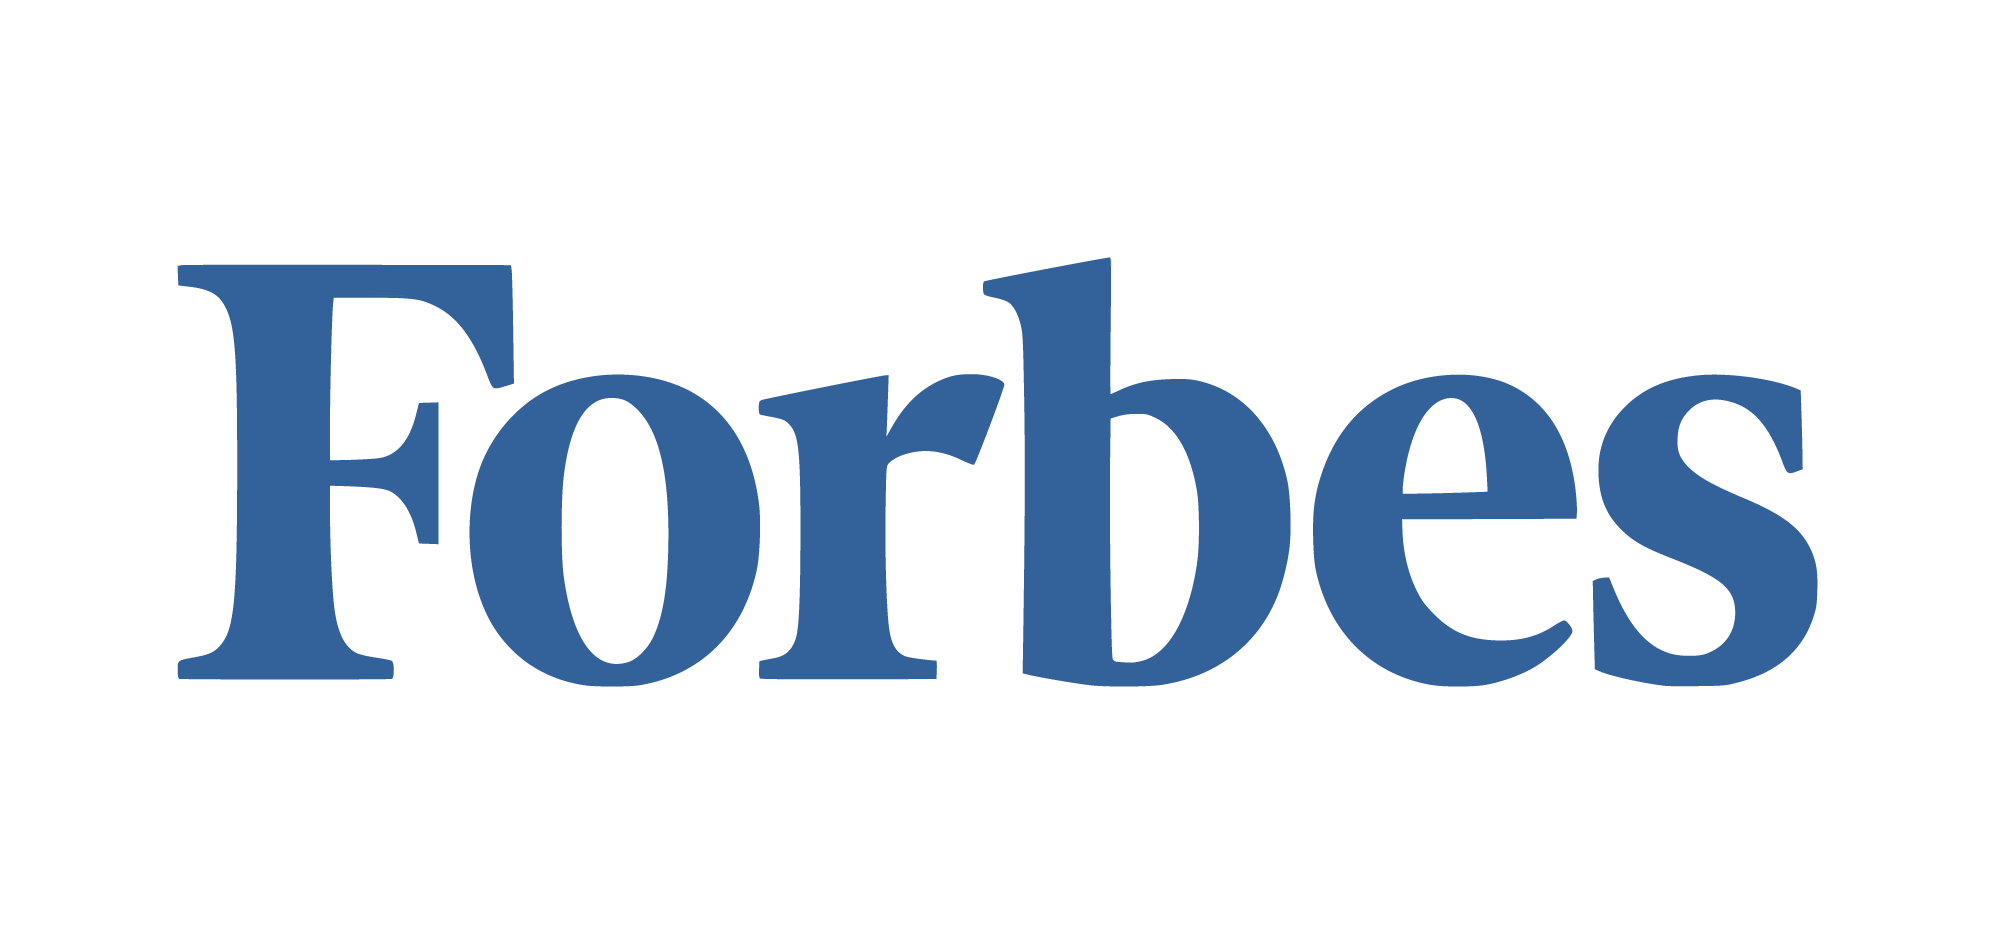 Forbes - logo